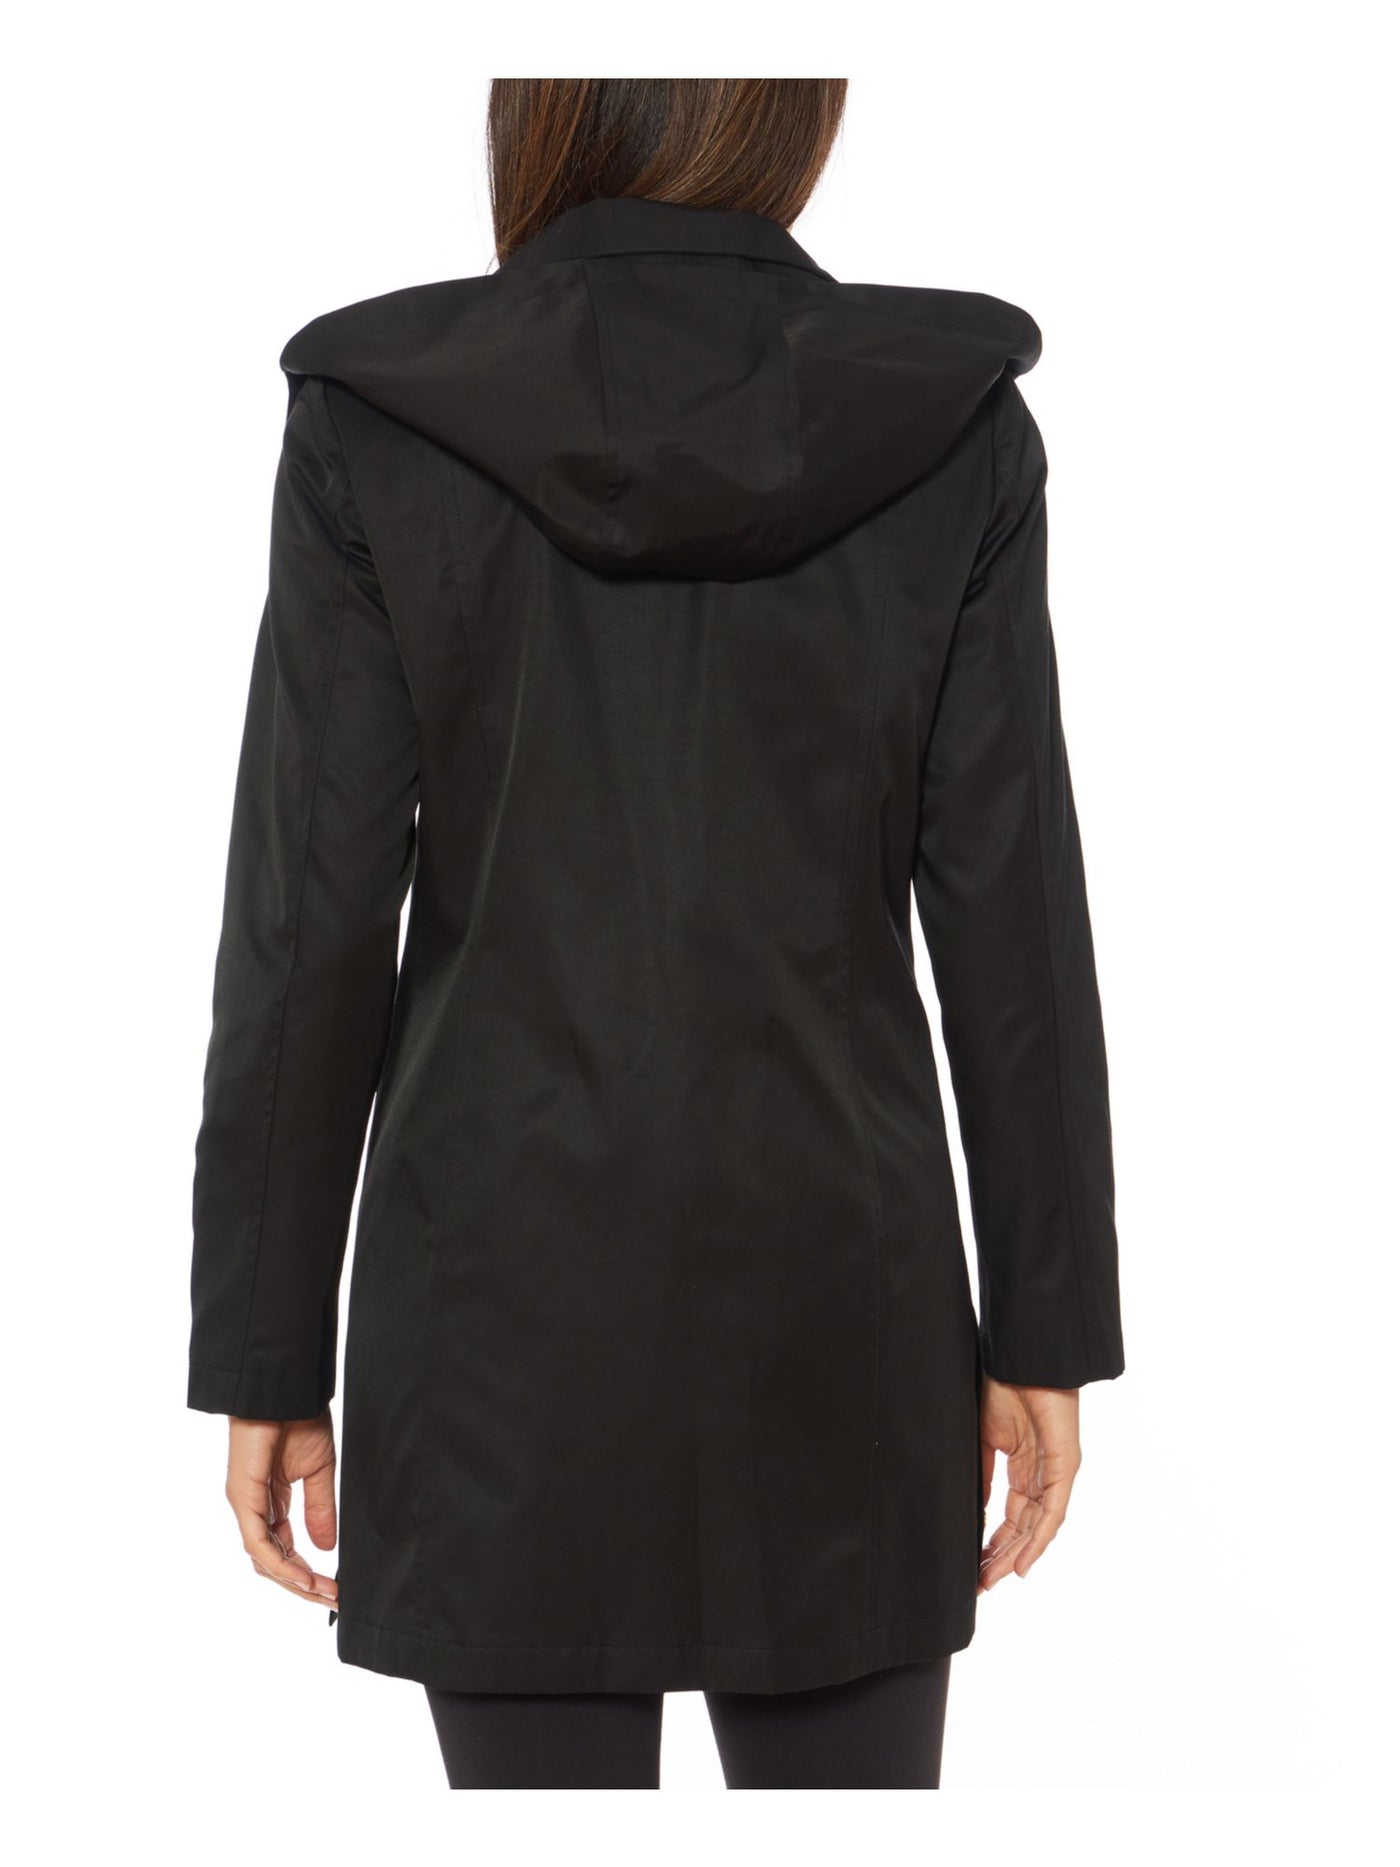 JONES NY Womens Black Pocketed Zippered Hooded Snap-collar Water-resista Raincoat S